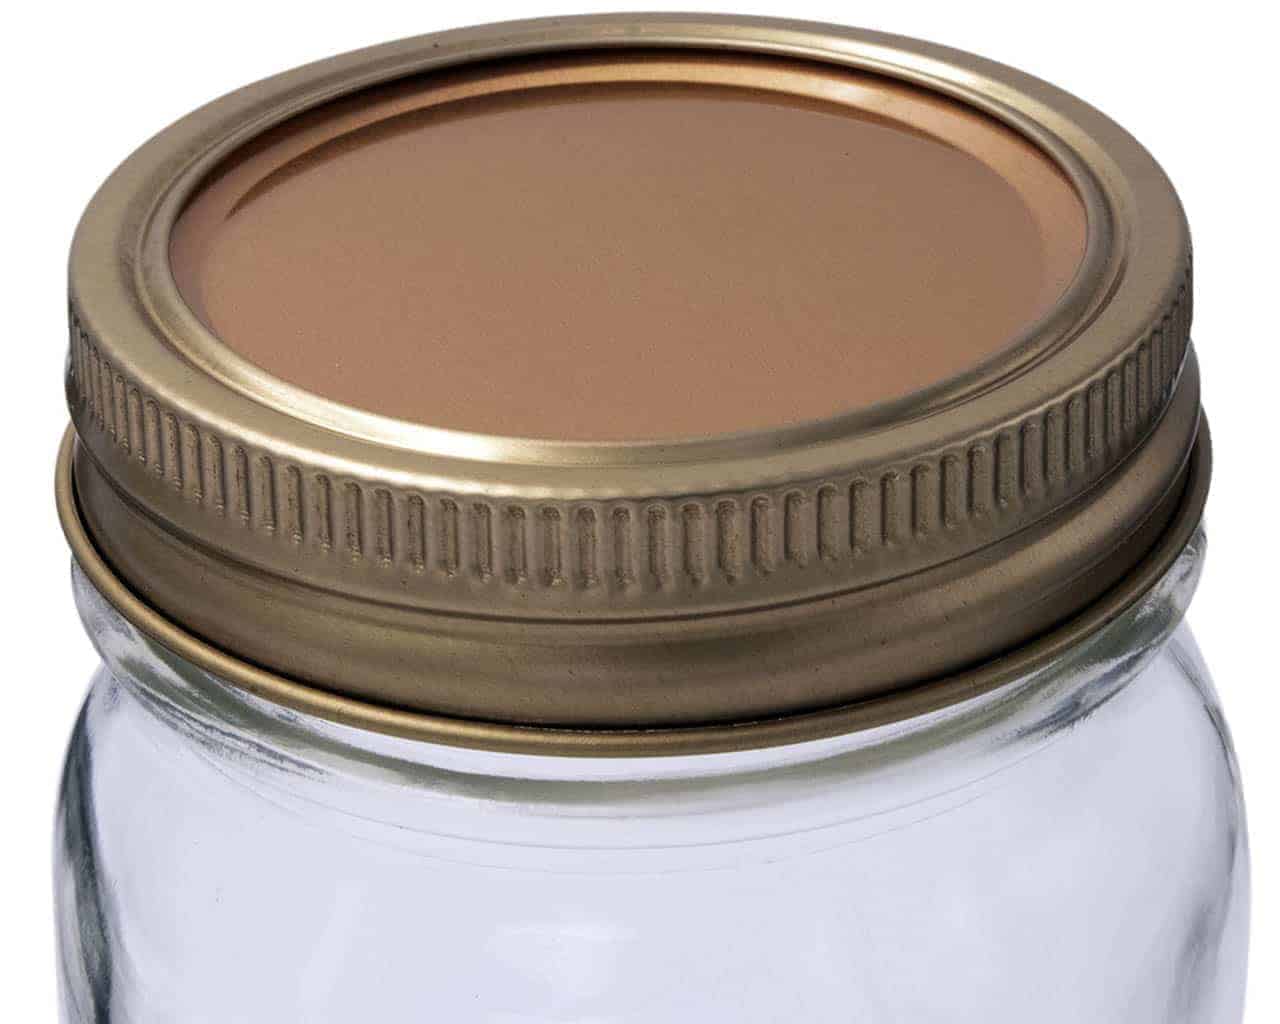 mason-jar-lifestyle-copper-flat-storage-lid-insert-and-copper-band-regular-mouth-mason-jar